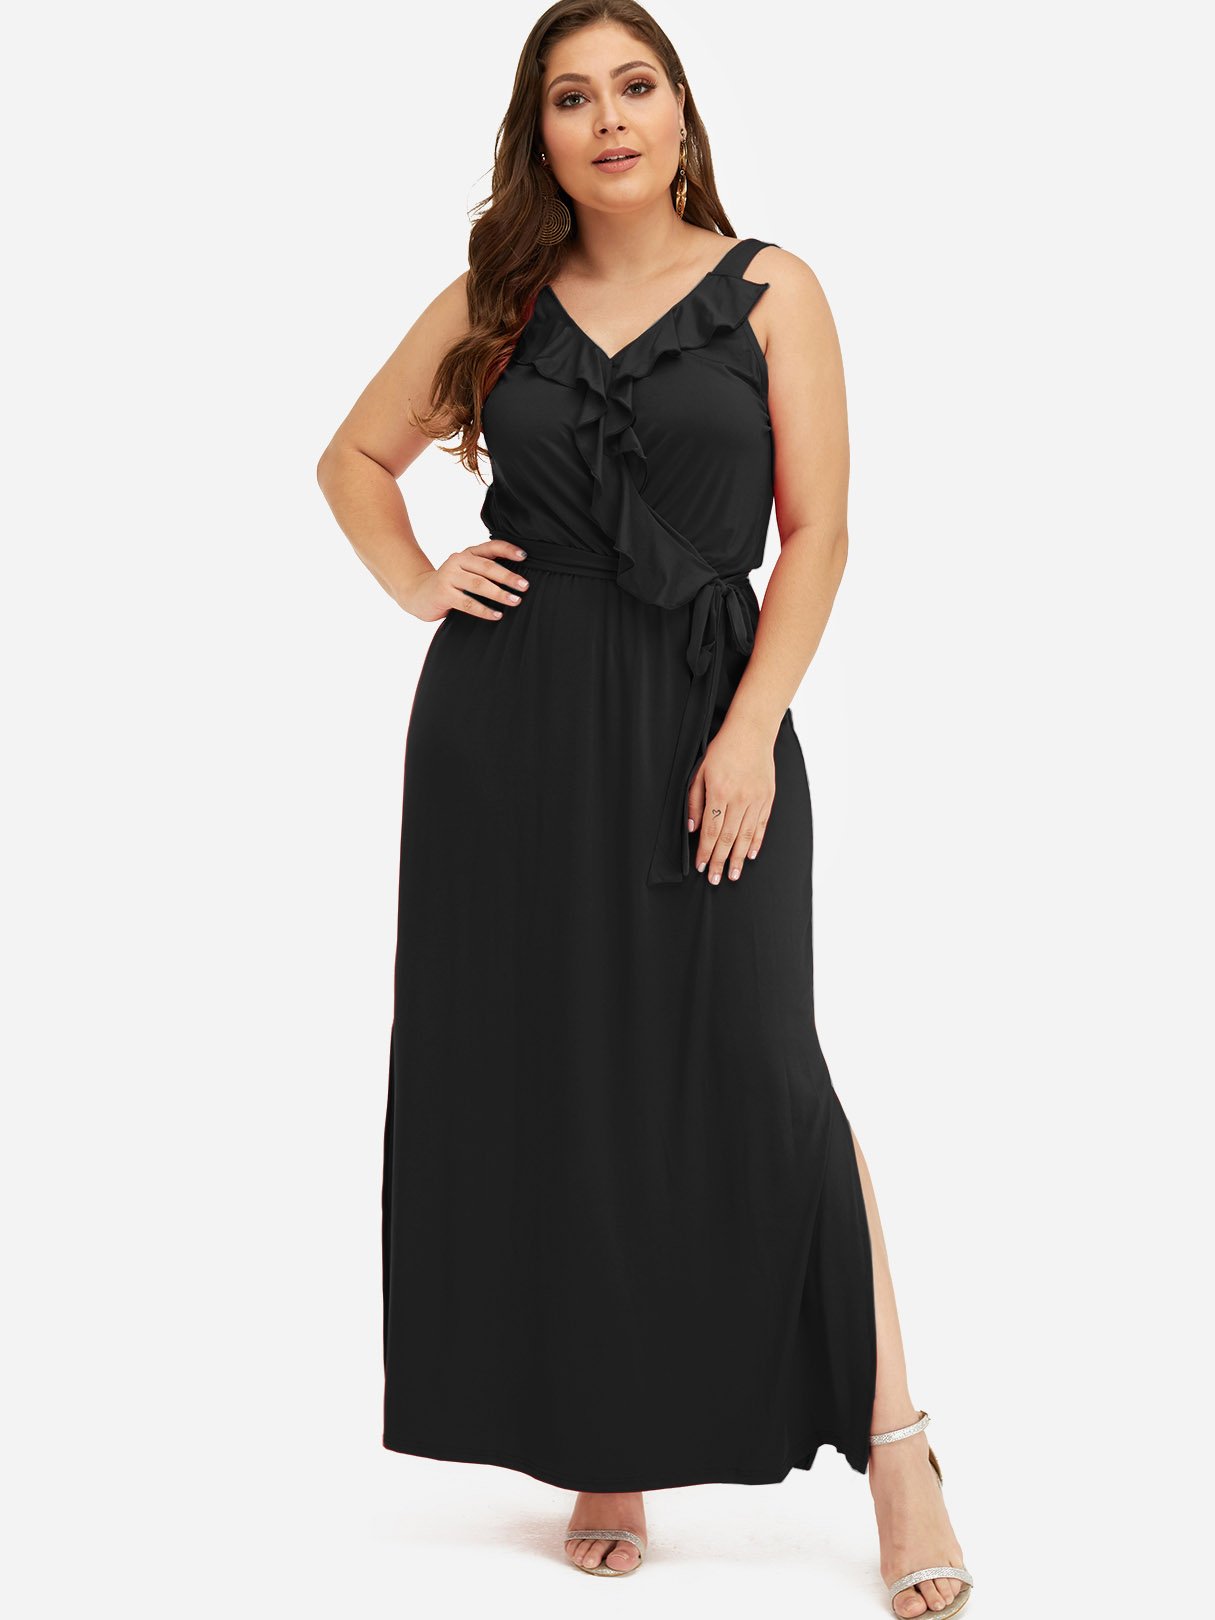 Wholesale V-Neck Plain Belt Ruffle Trim Sleeveless Black Plus Size Dress